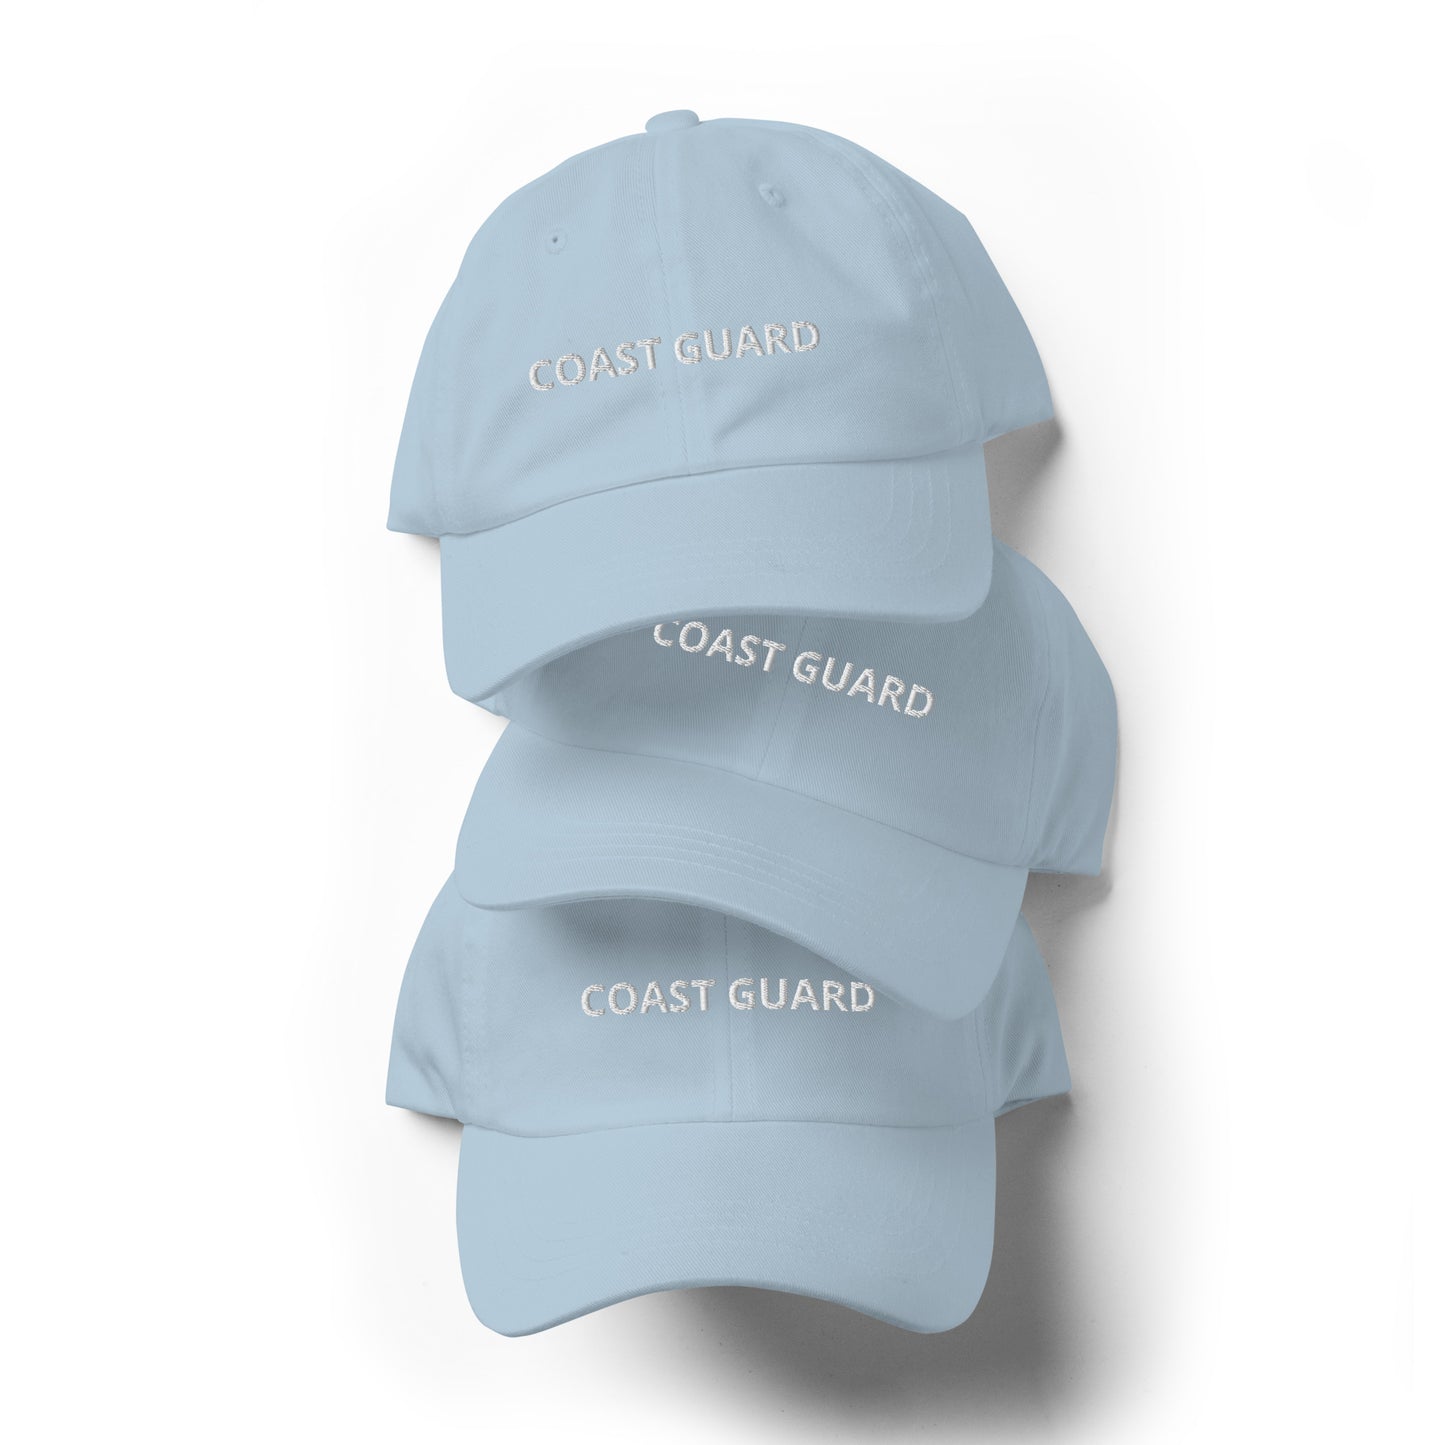 COAST GUARD  hat